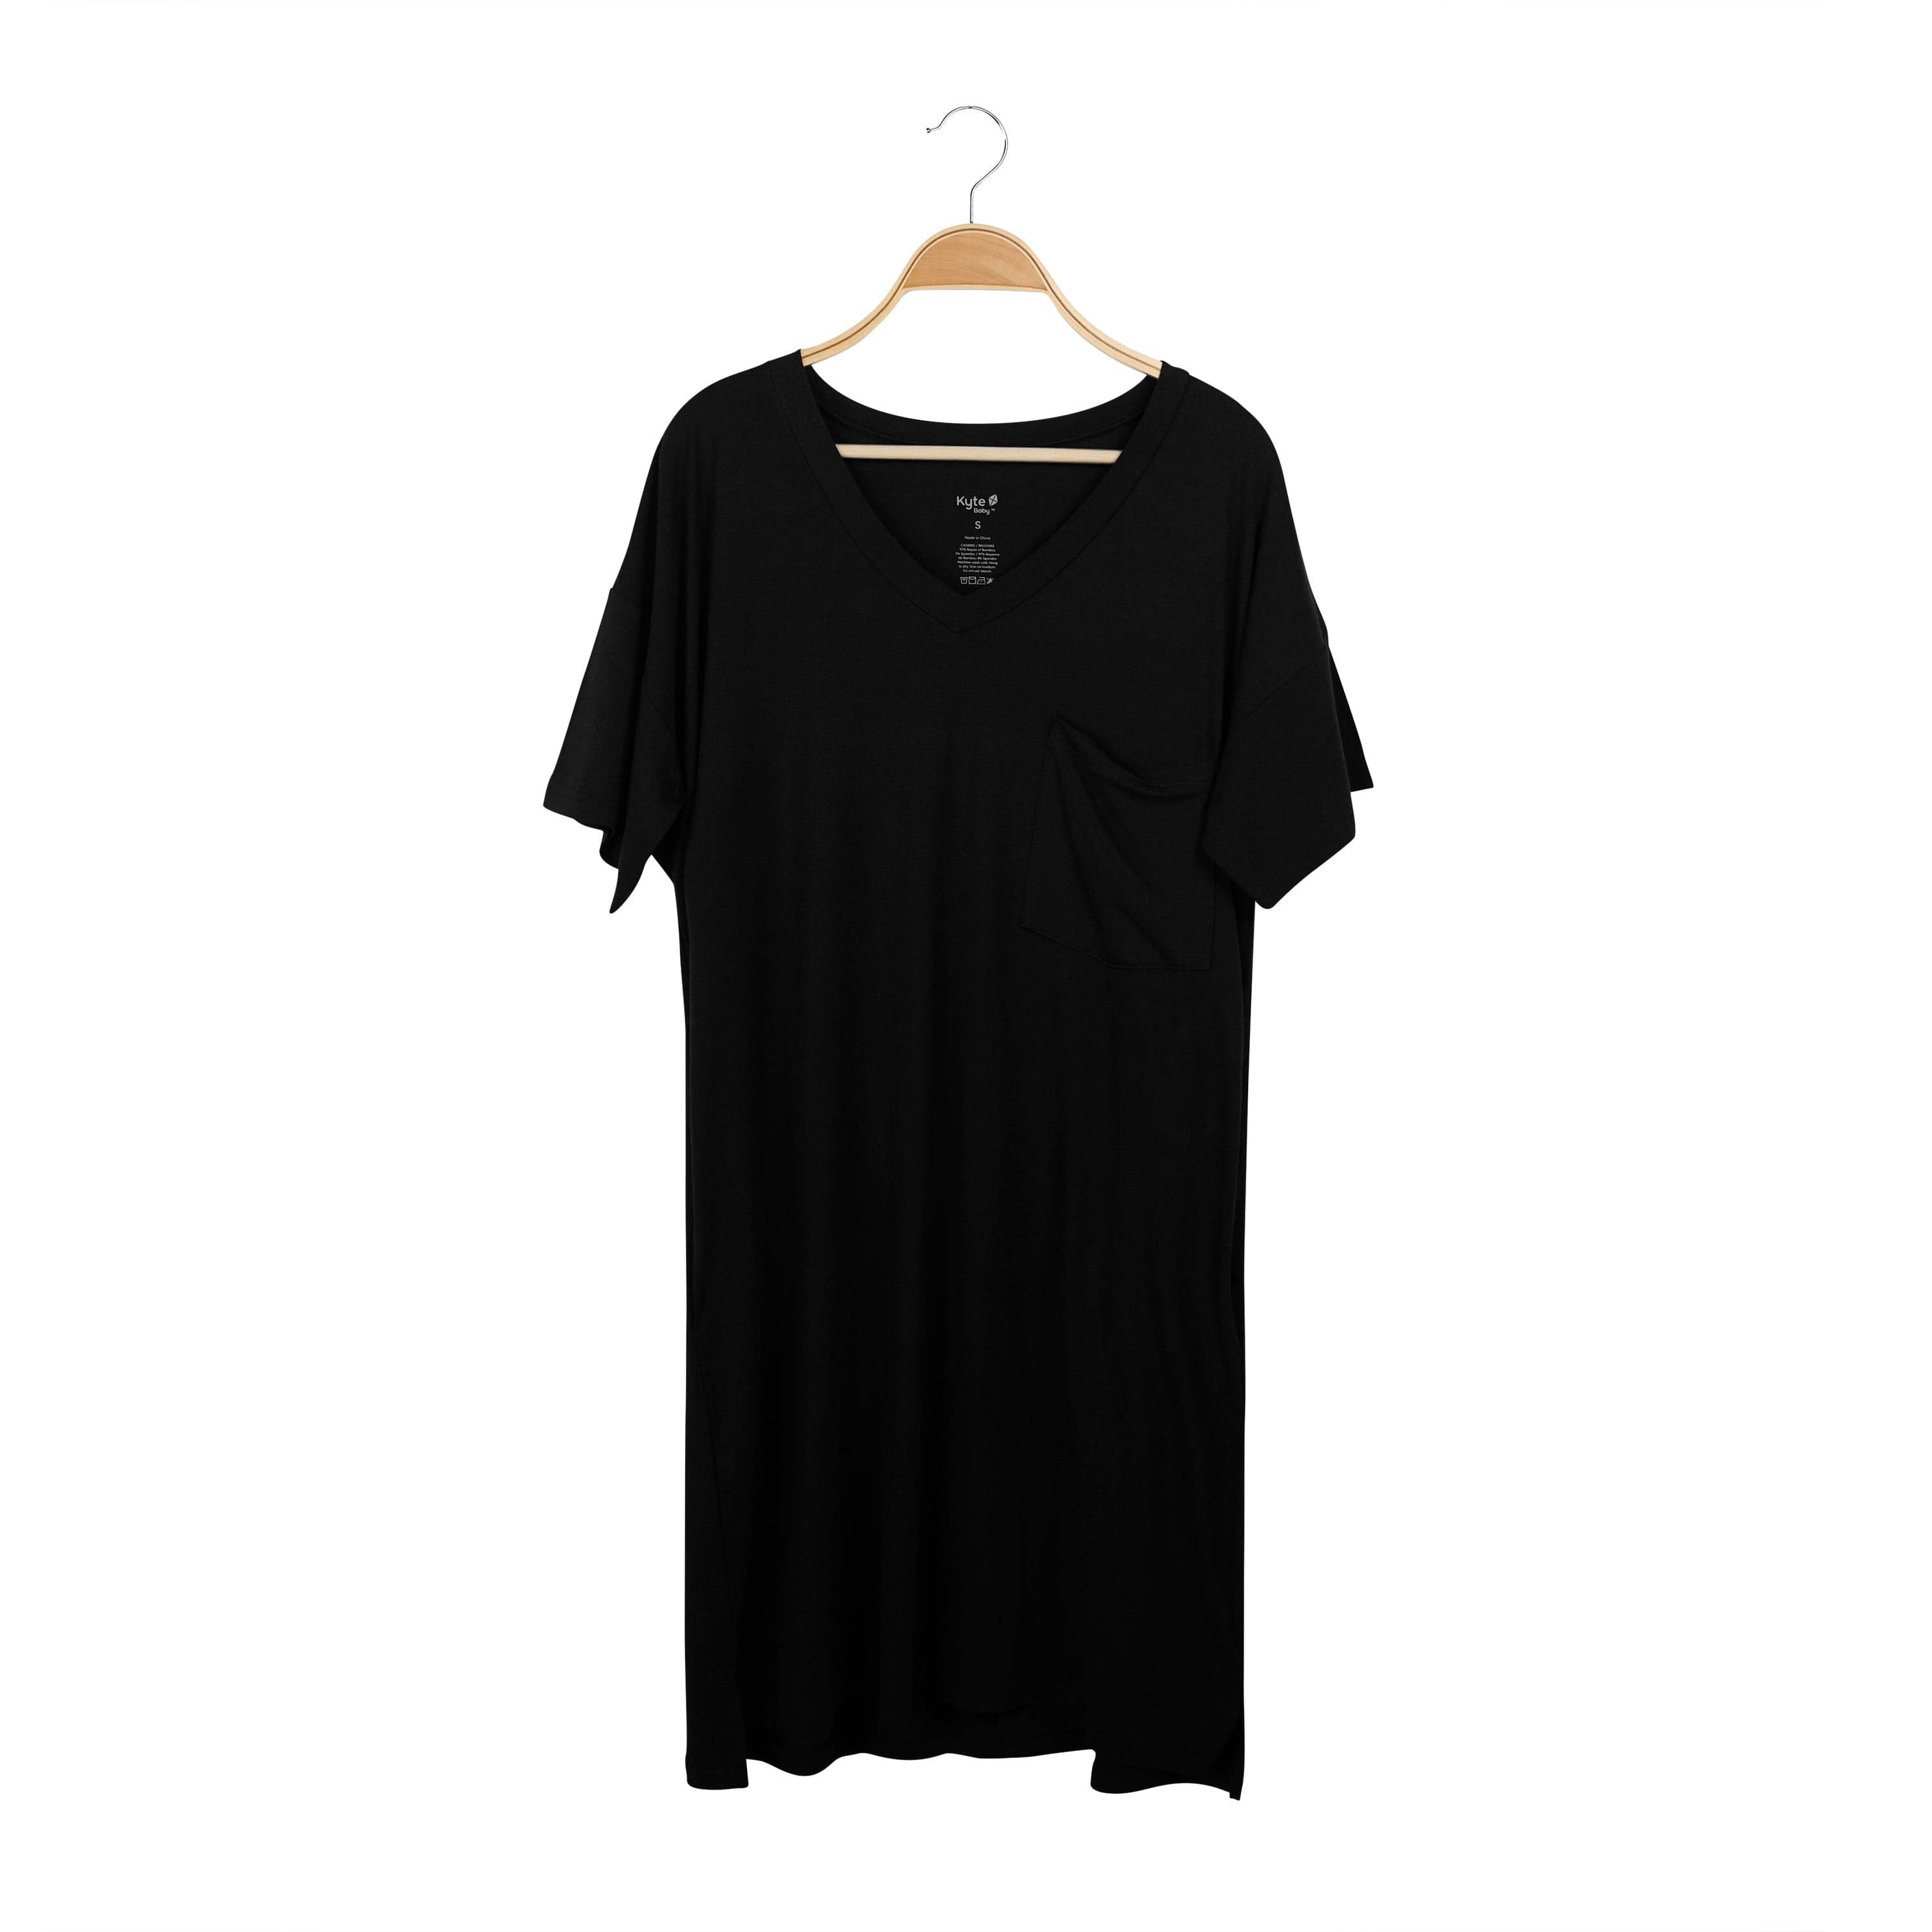 Kyte Baby Adult T-Shirt Dress Women's T-Shirt Dress in Midnight